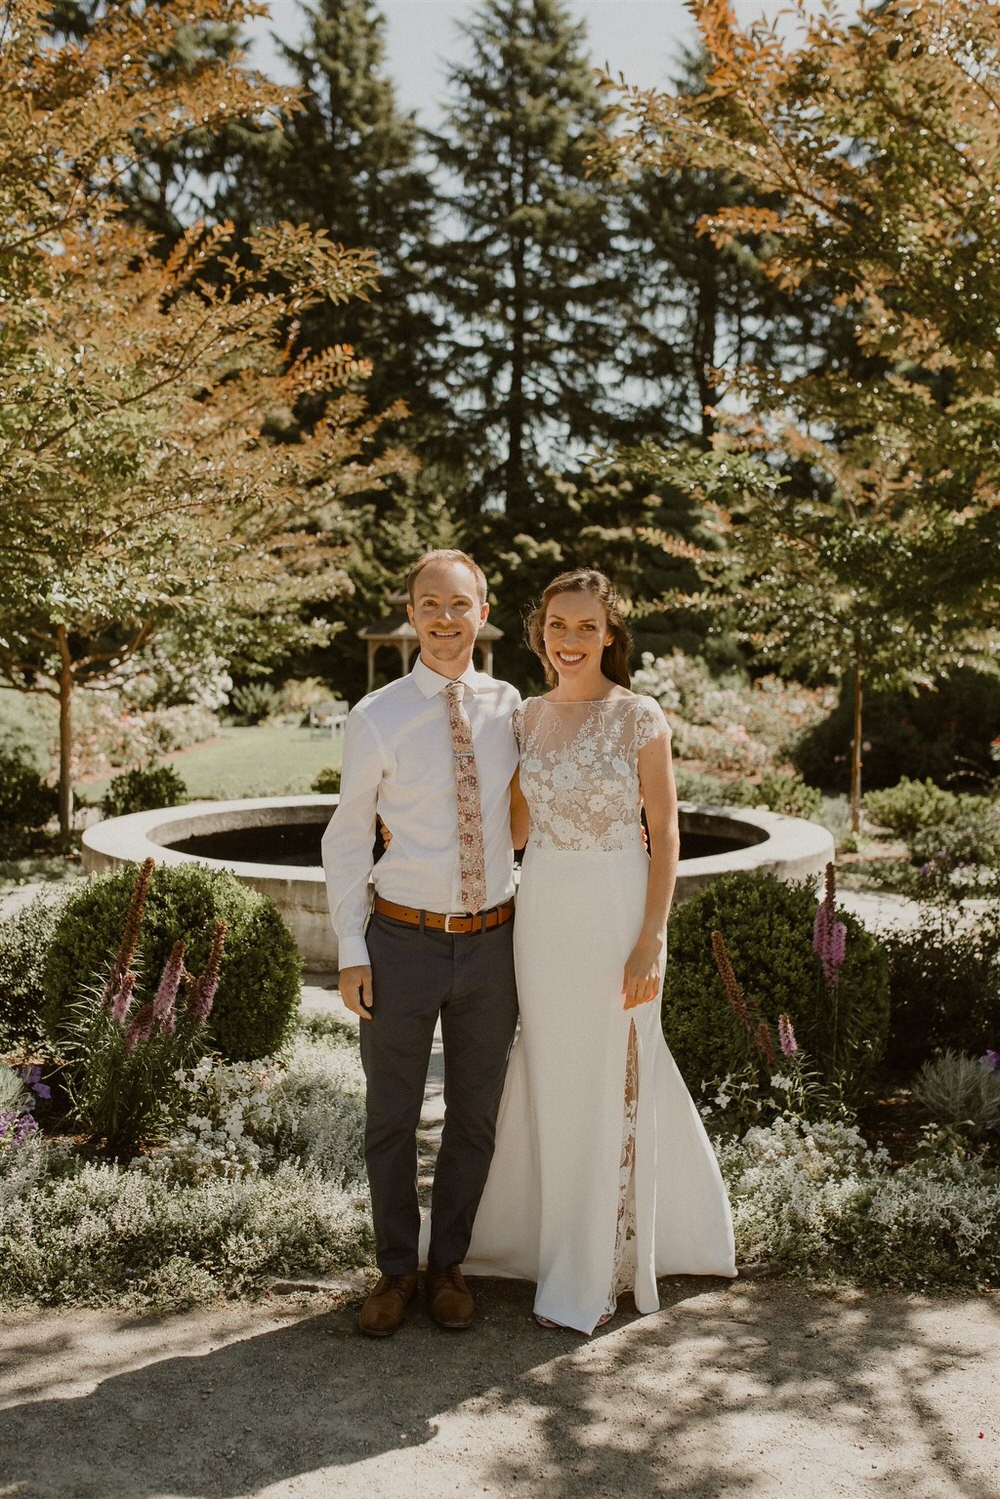 Summer morning wedding ceremony at Woodland Park Rose Garden in Seattle. 